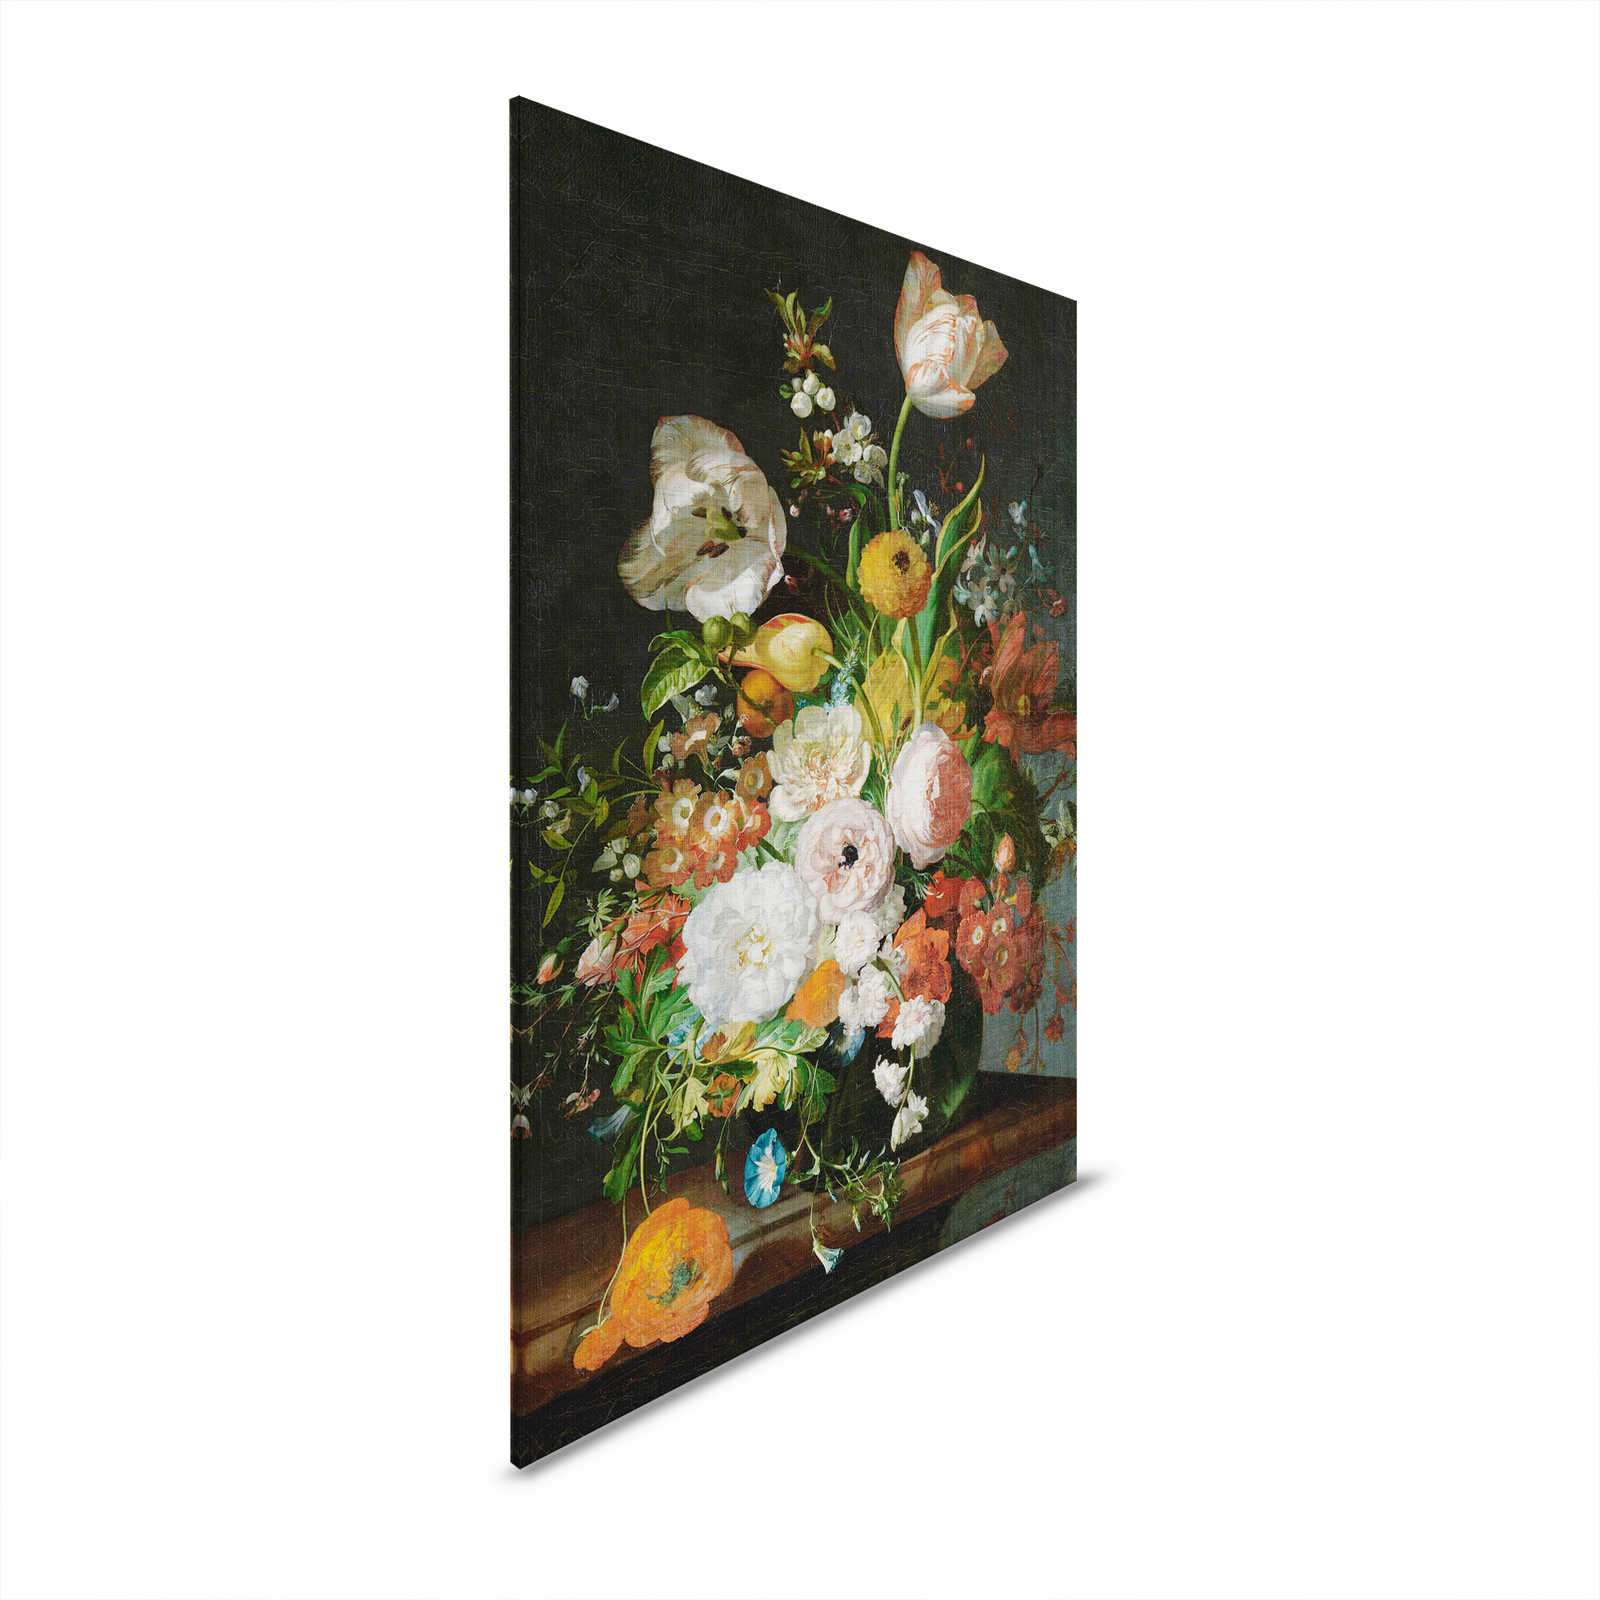 Artists Studio 2 - Canvas painting Flowers Bouquet Painting Art style - 0.80 m x 1.20 m
